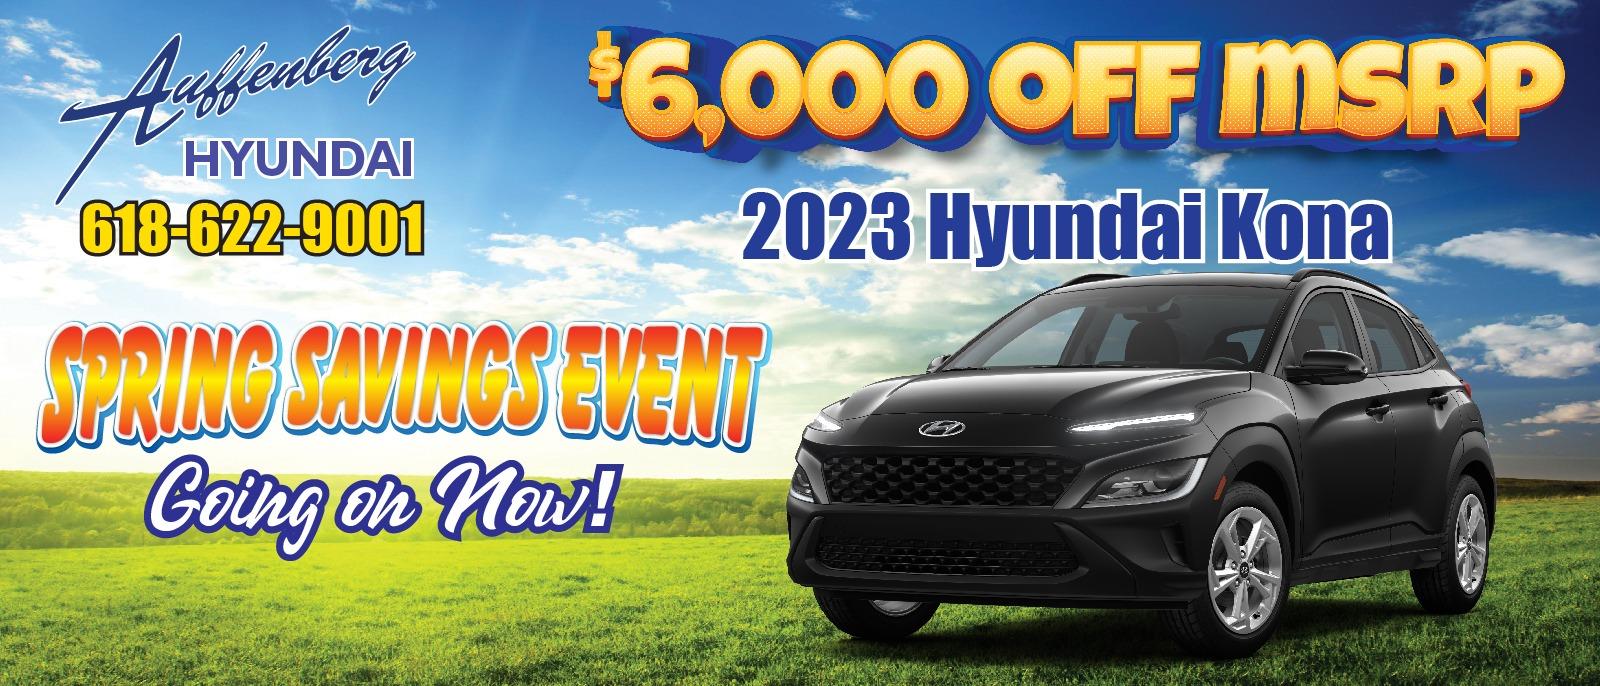 2023 Hyundai Kona
$6,000 off MSRP